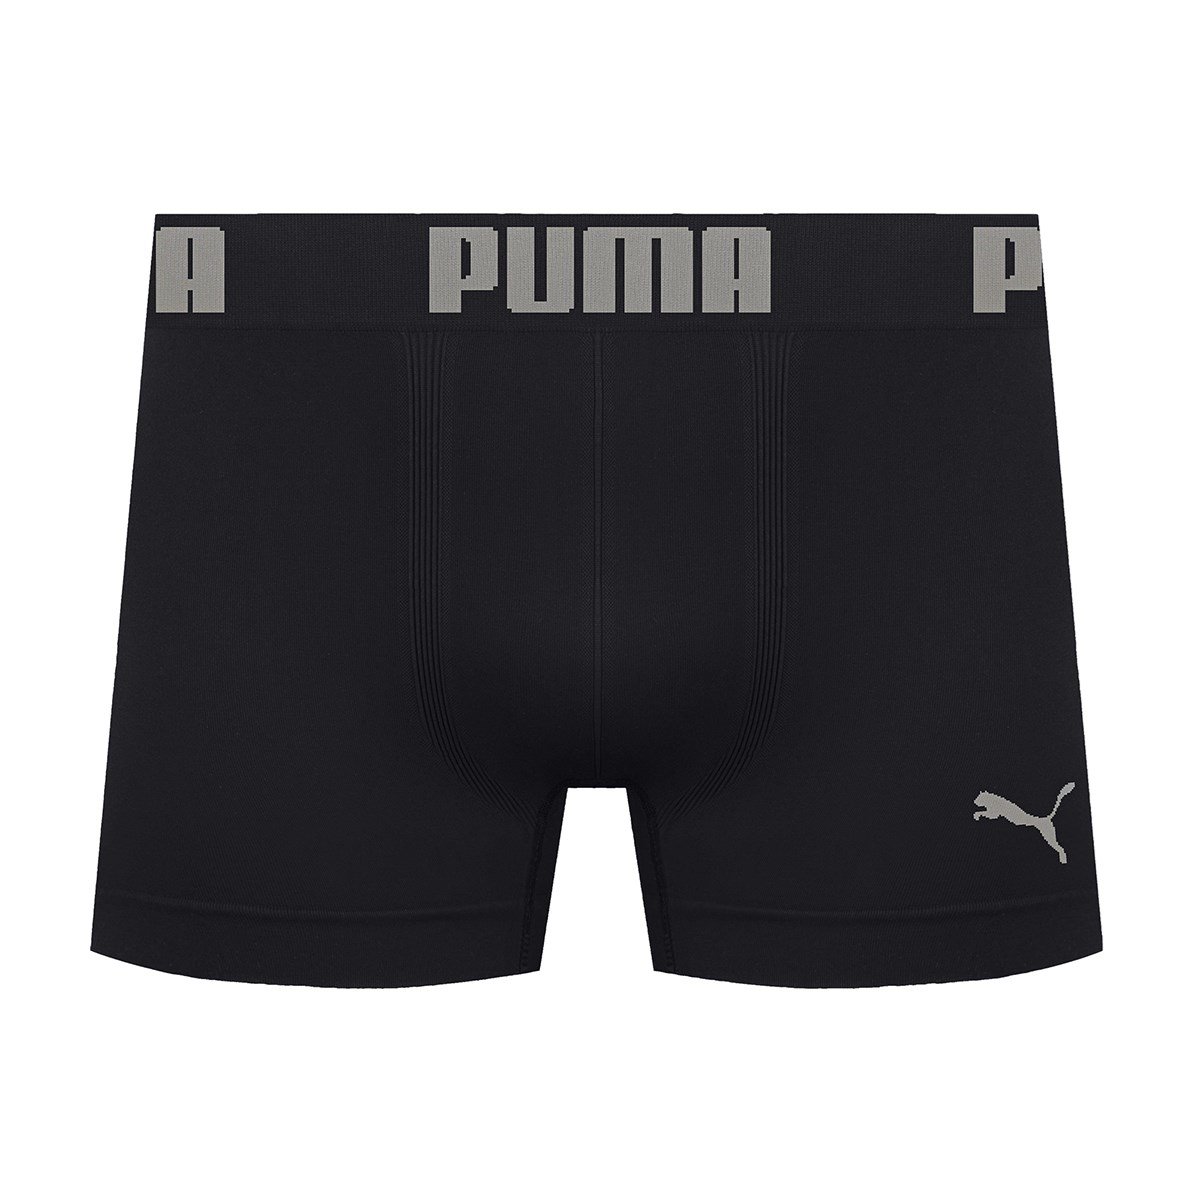 Cueca Boxer Puma Sem Costura Masculina - Preto e Prata Preto 1